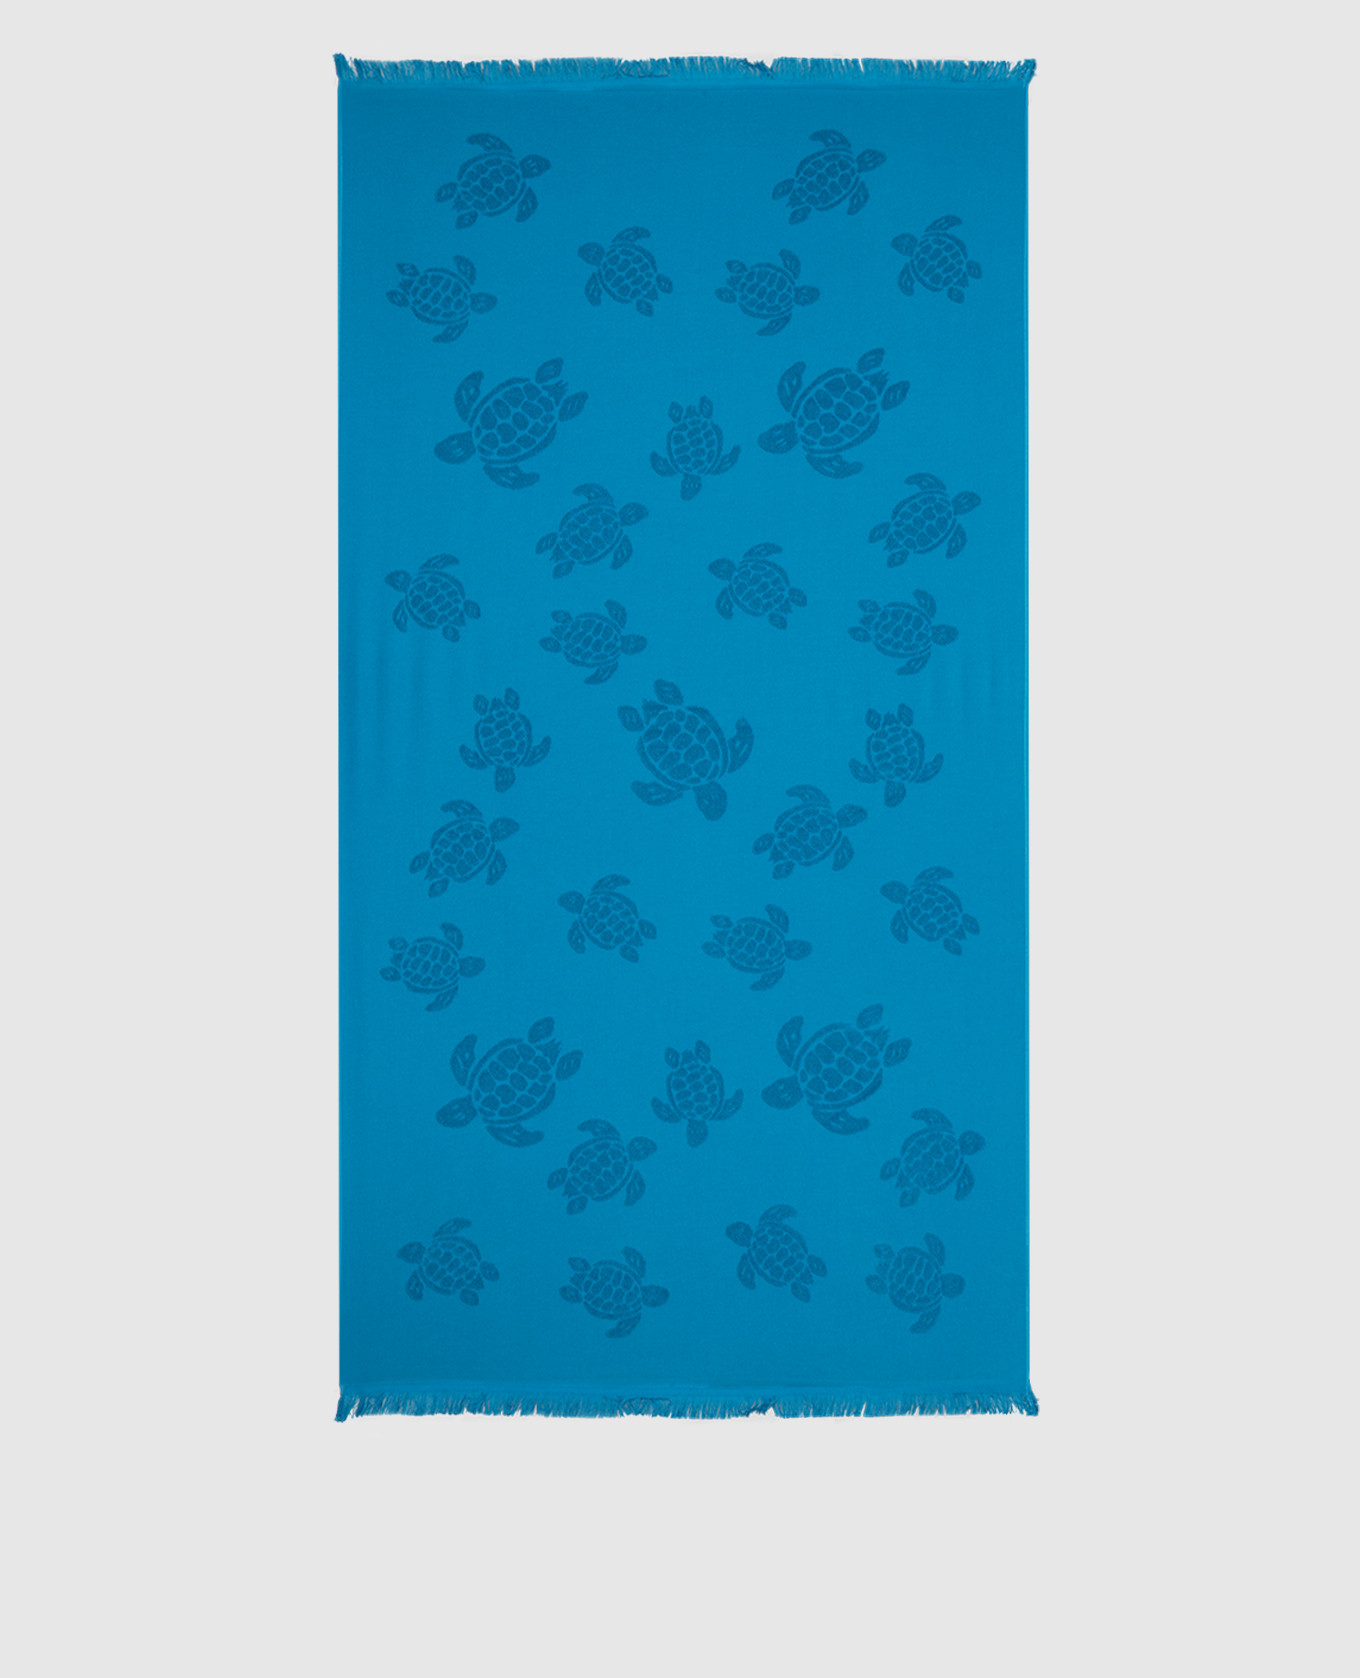 Blue SANTAH towel in textured logo pattern